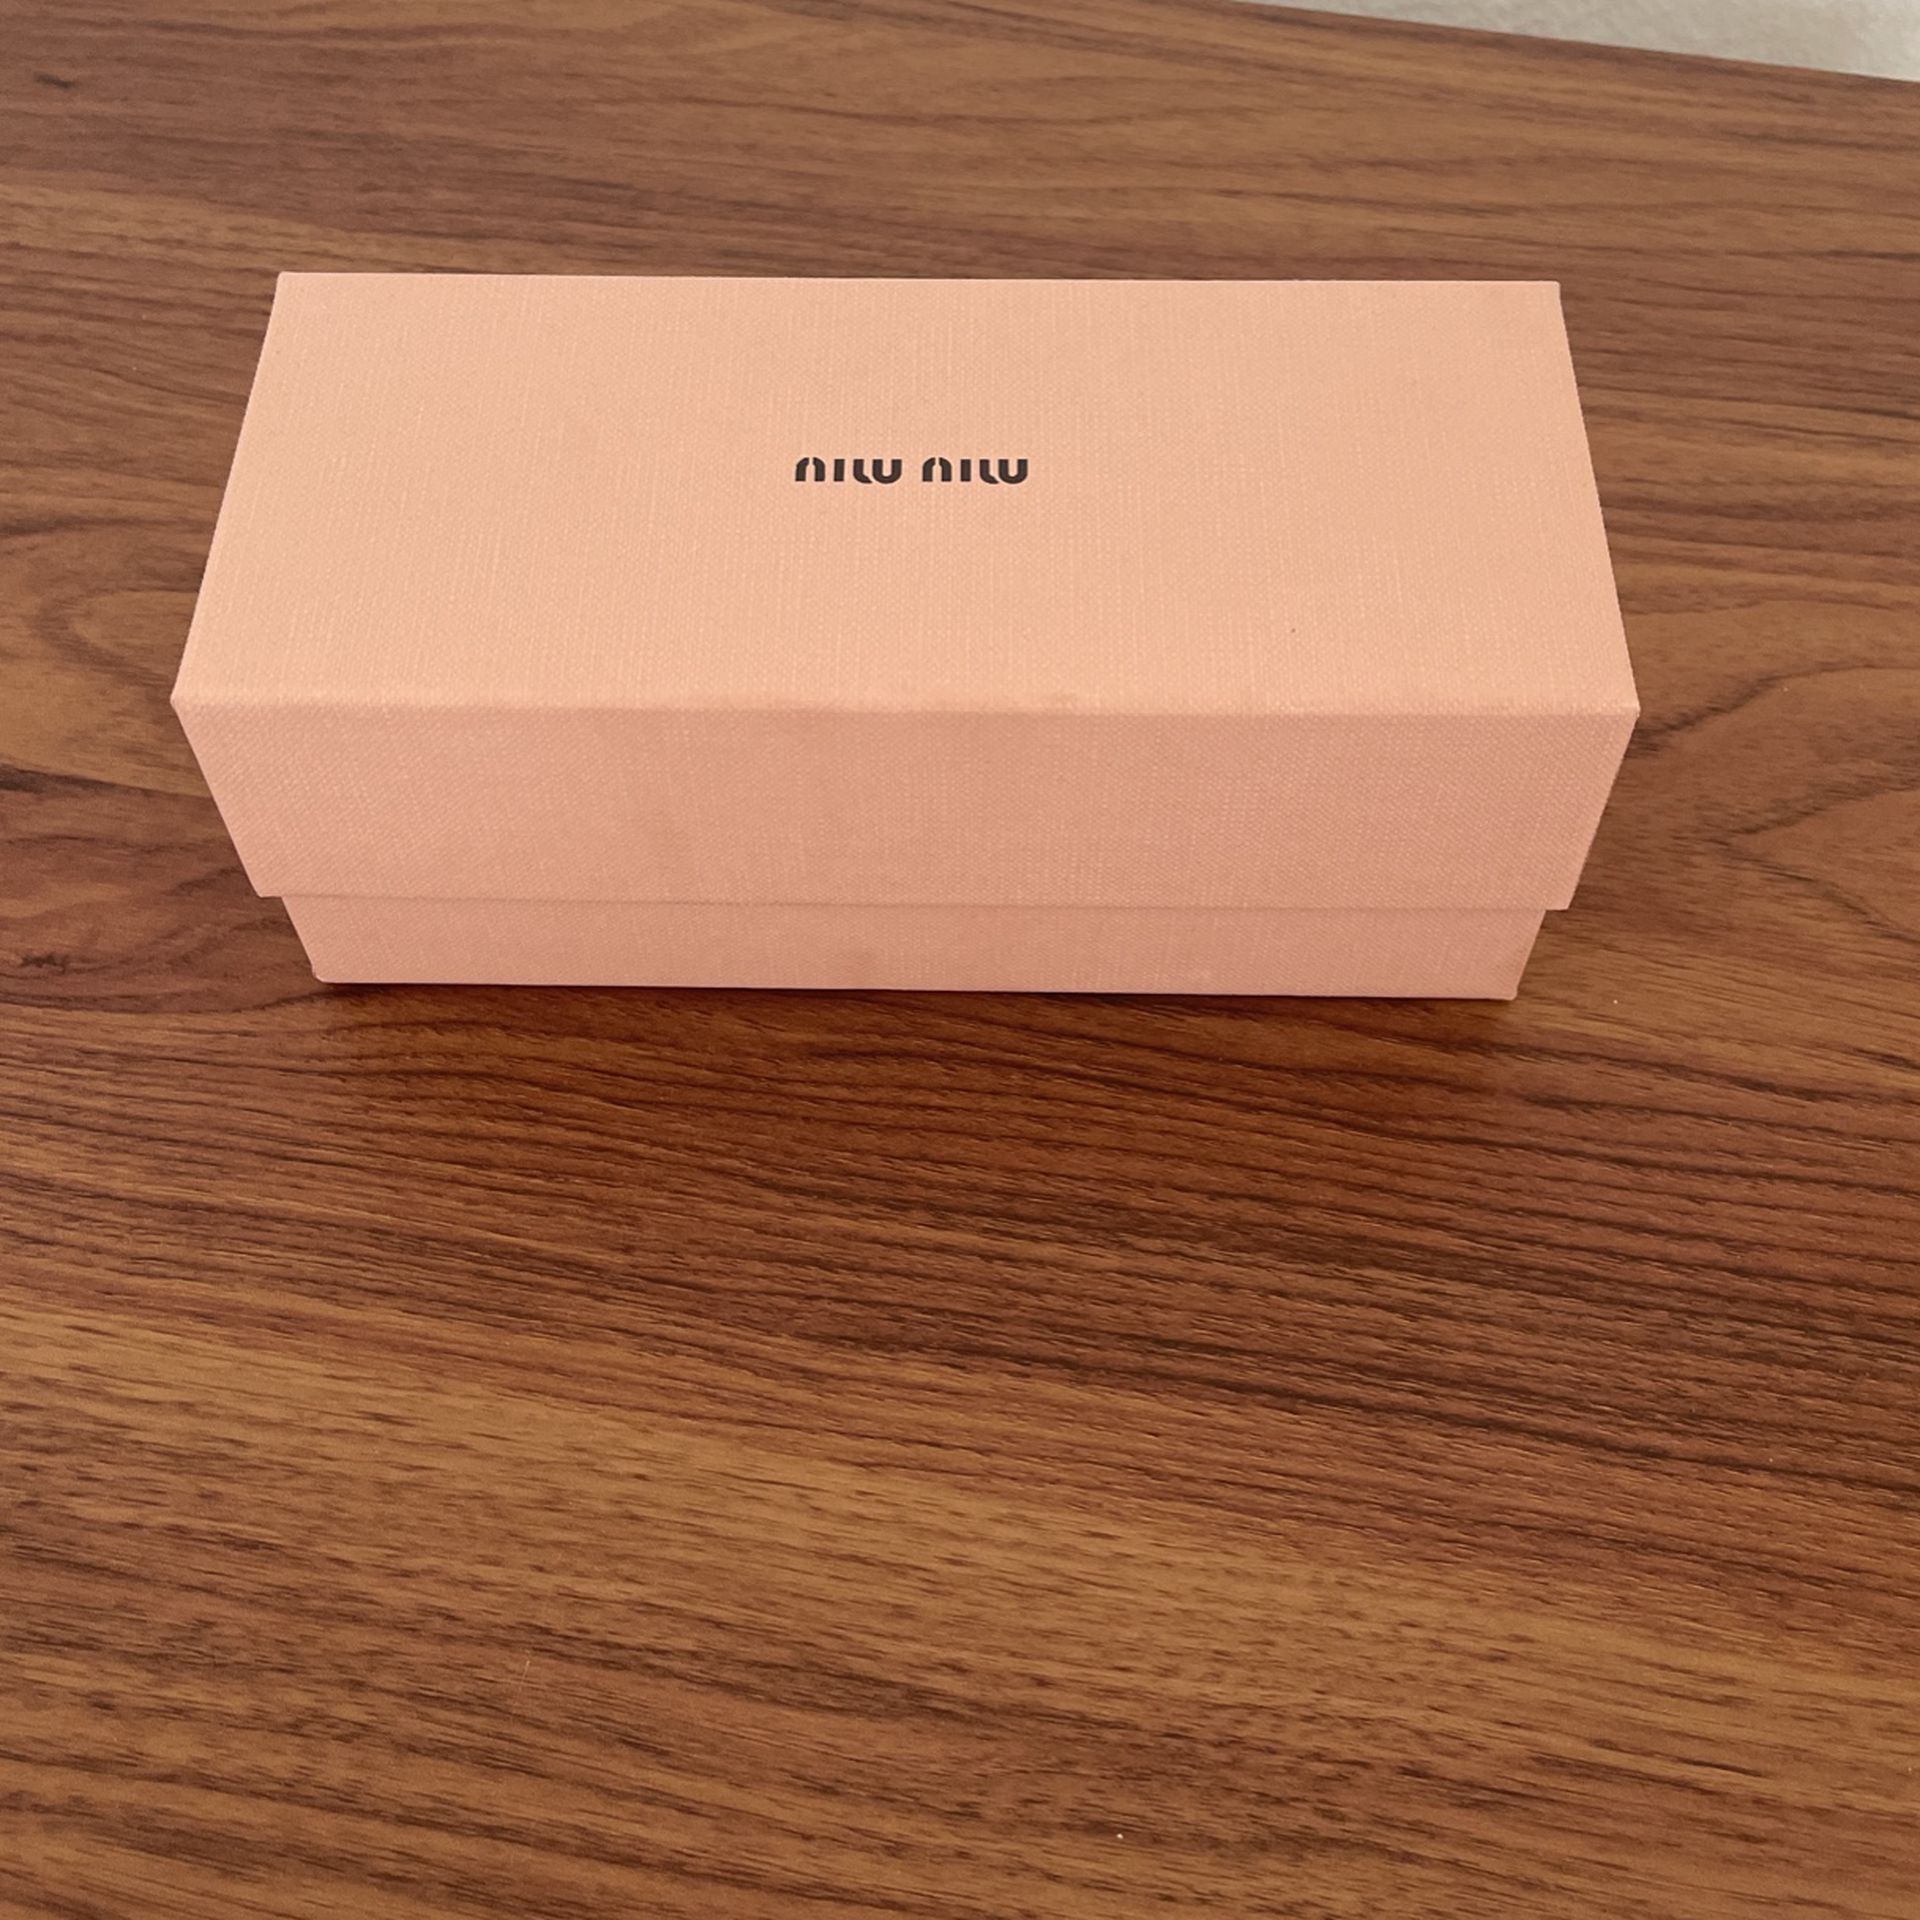 Miu Miu Box/ Package 